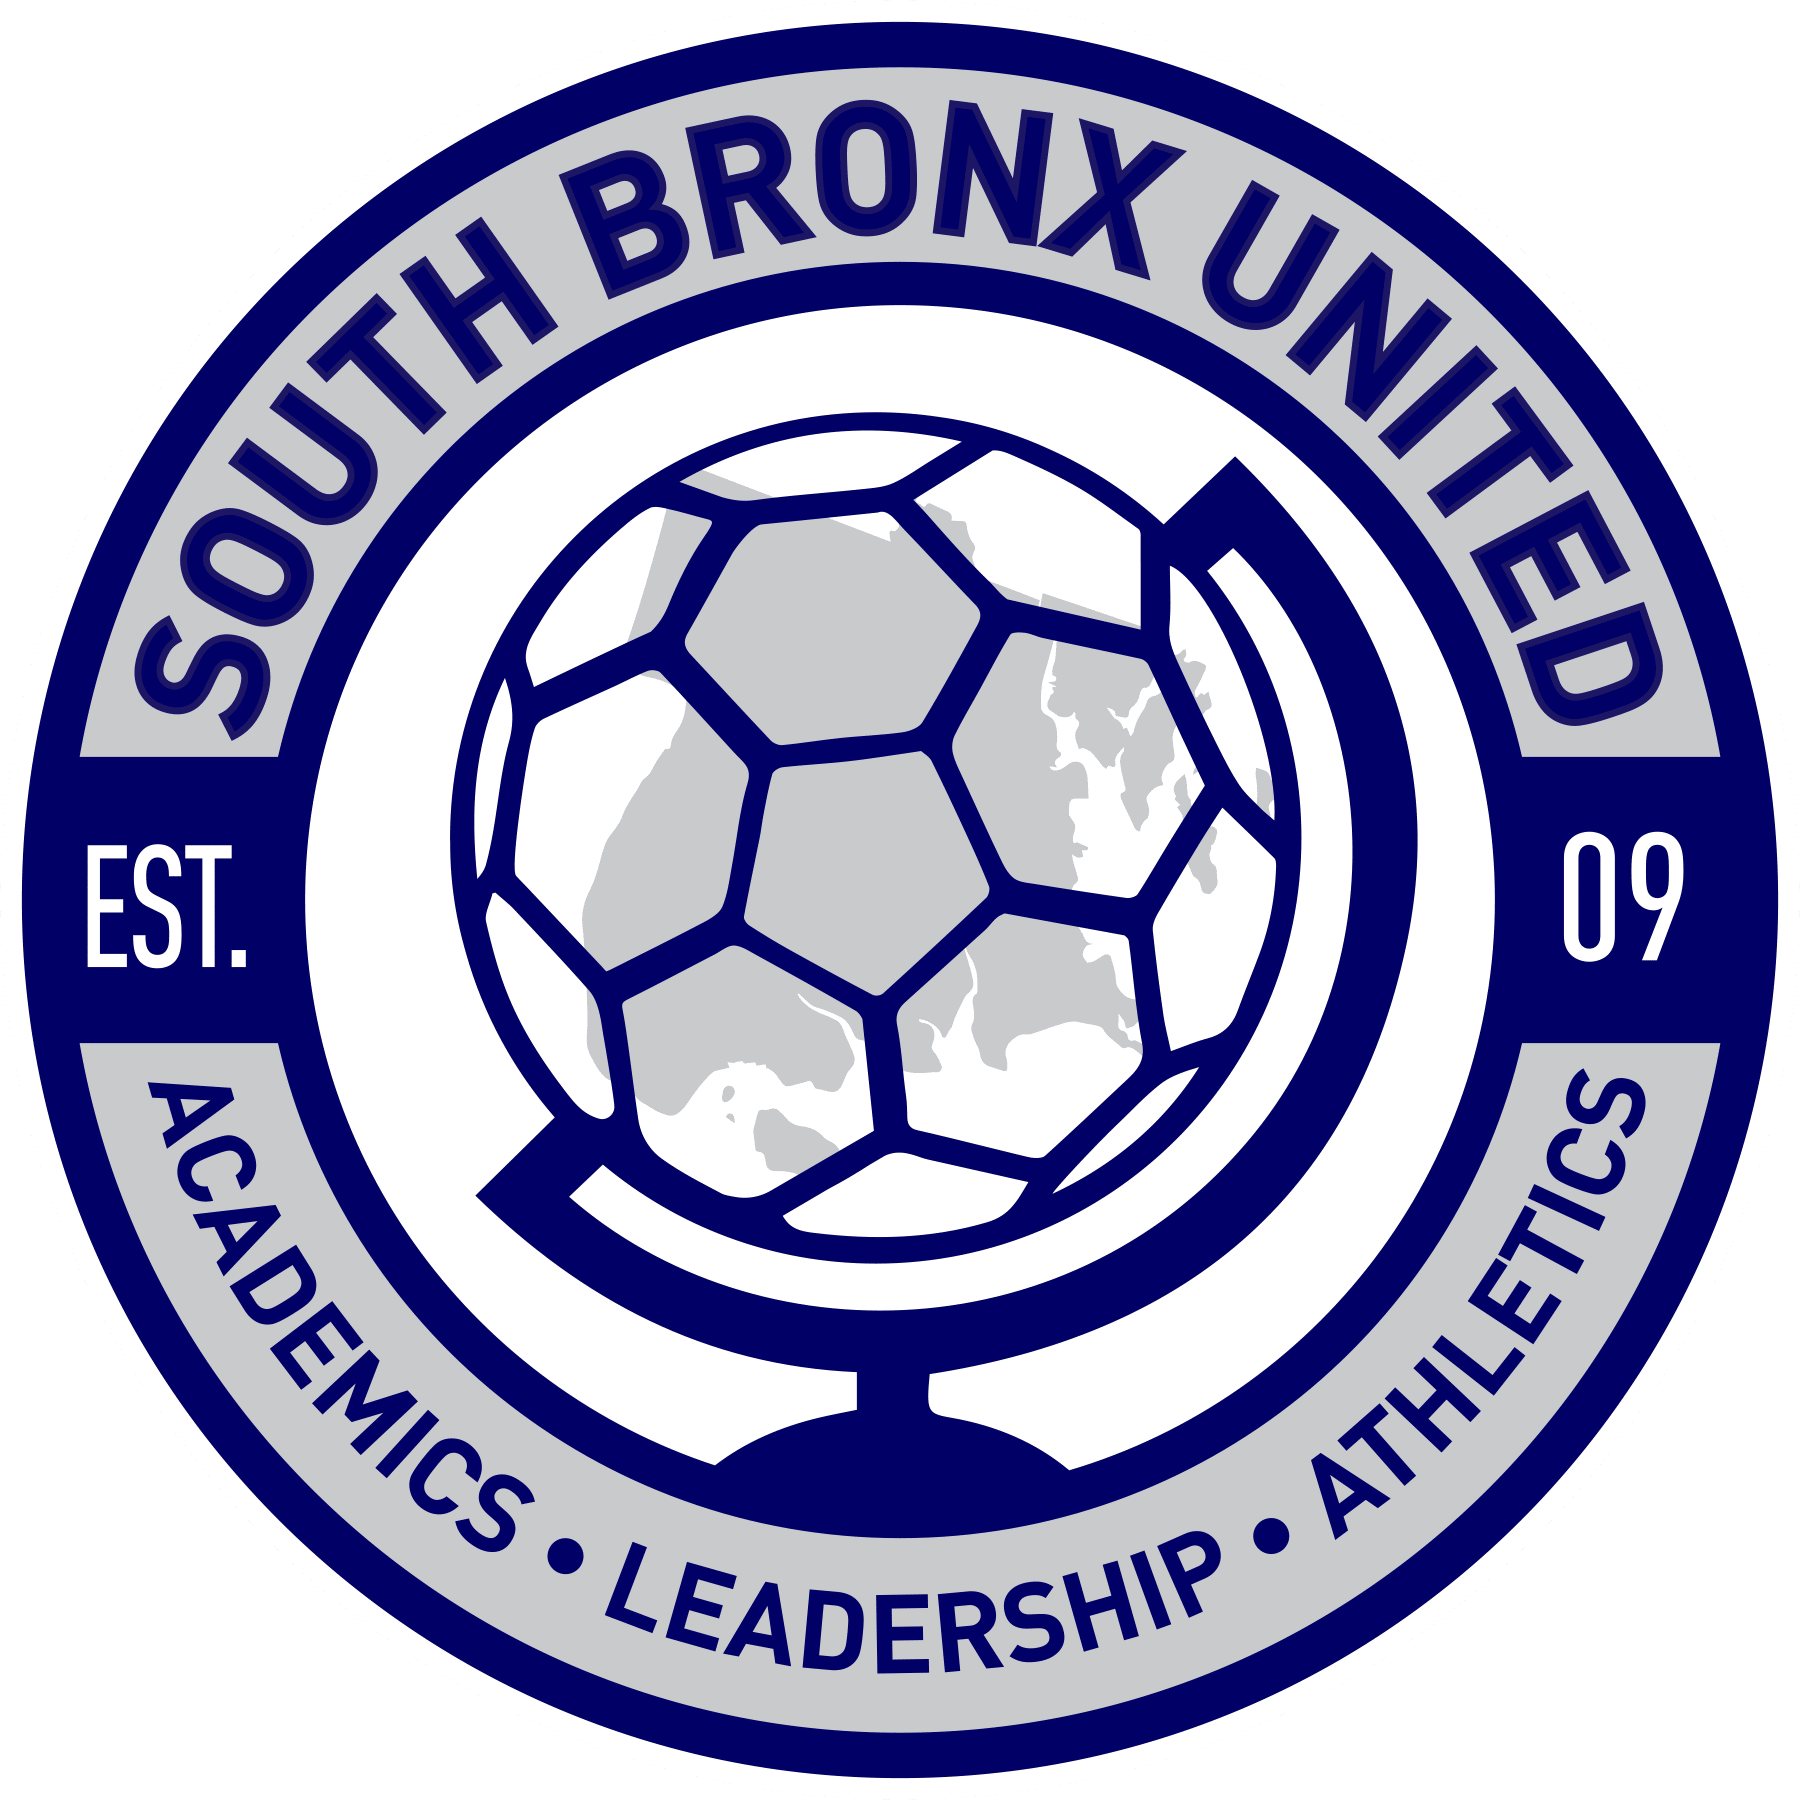 south bronx united logo